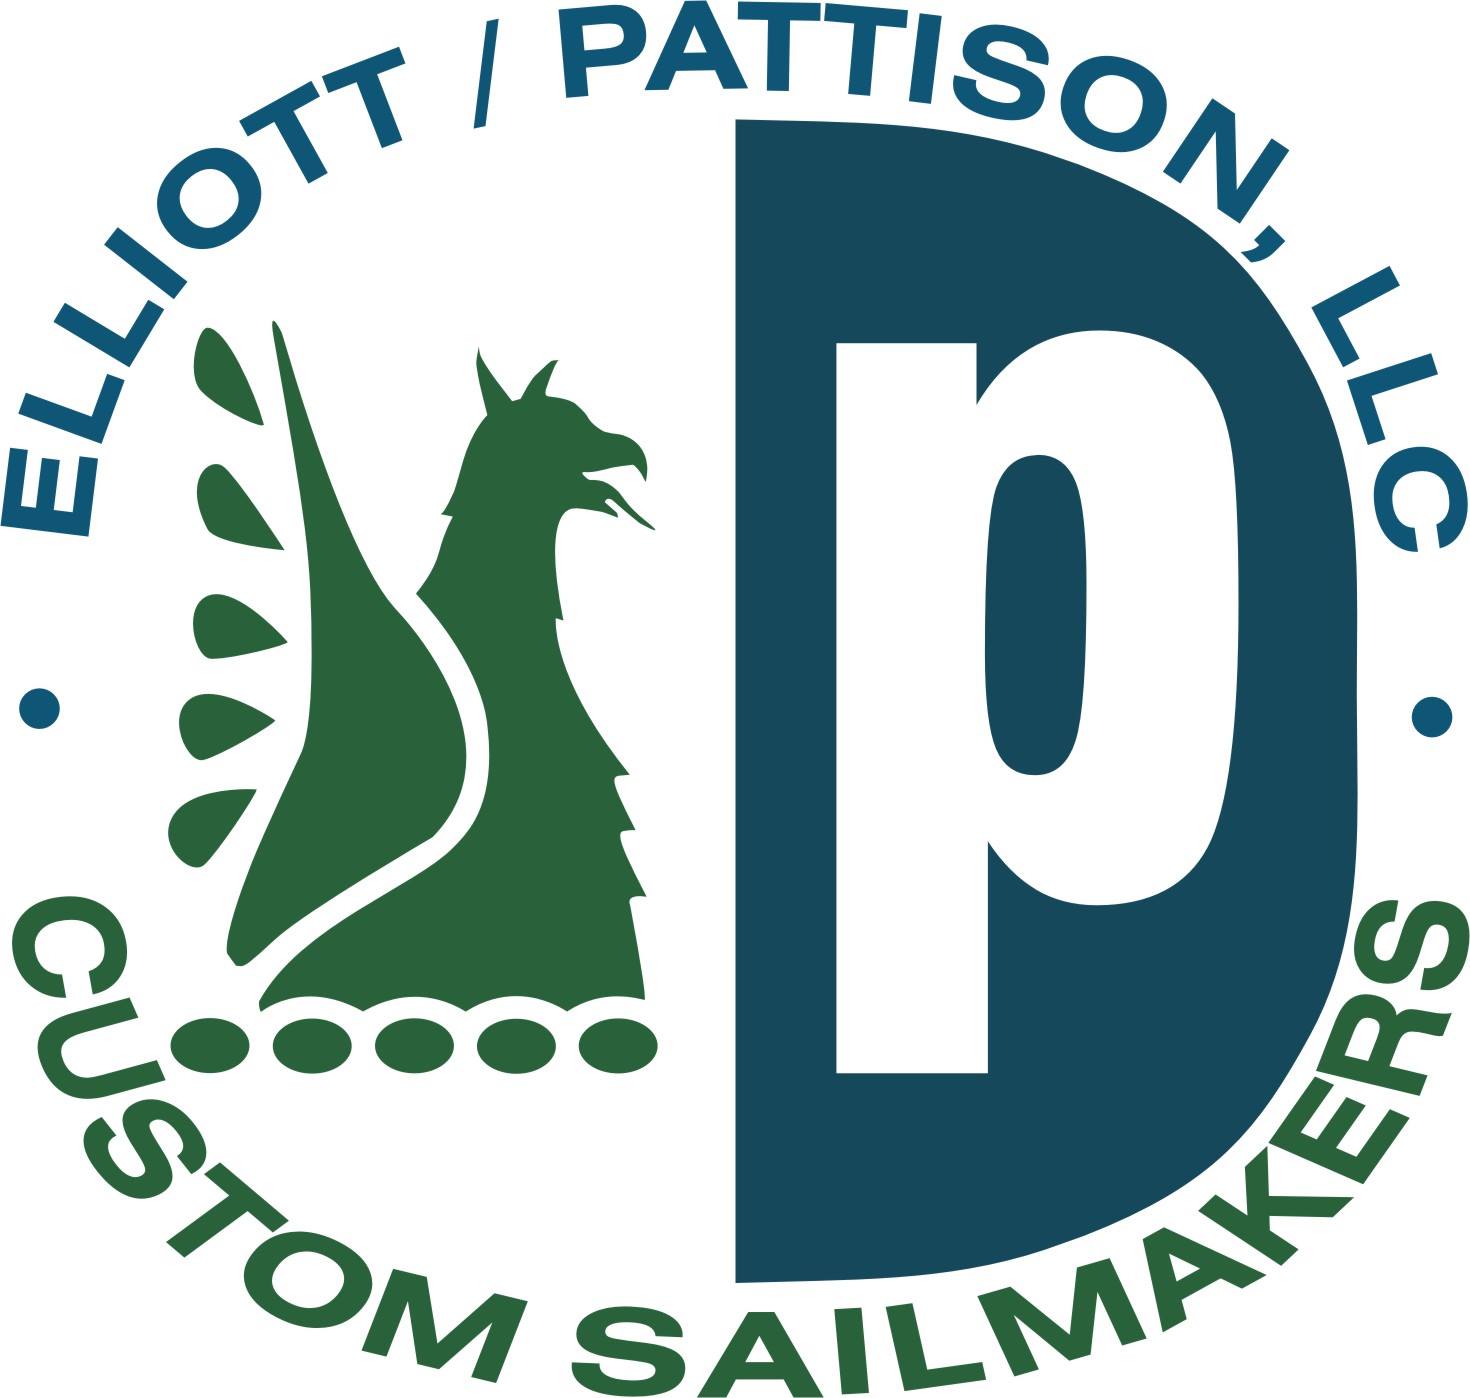 Elliott / Pattison Sailmakers, Inc.